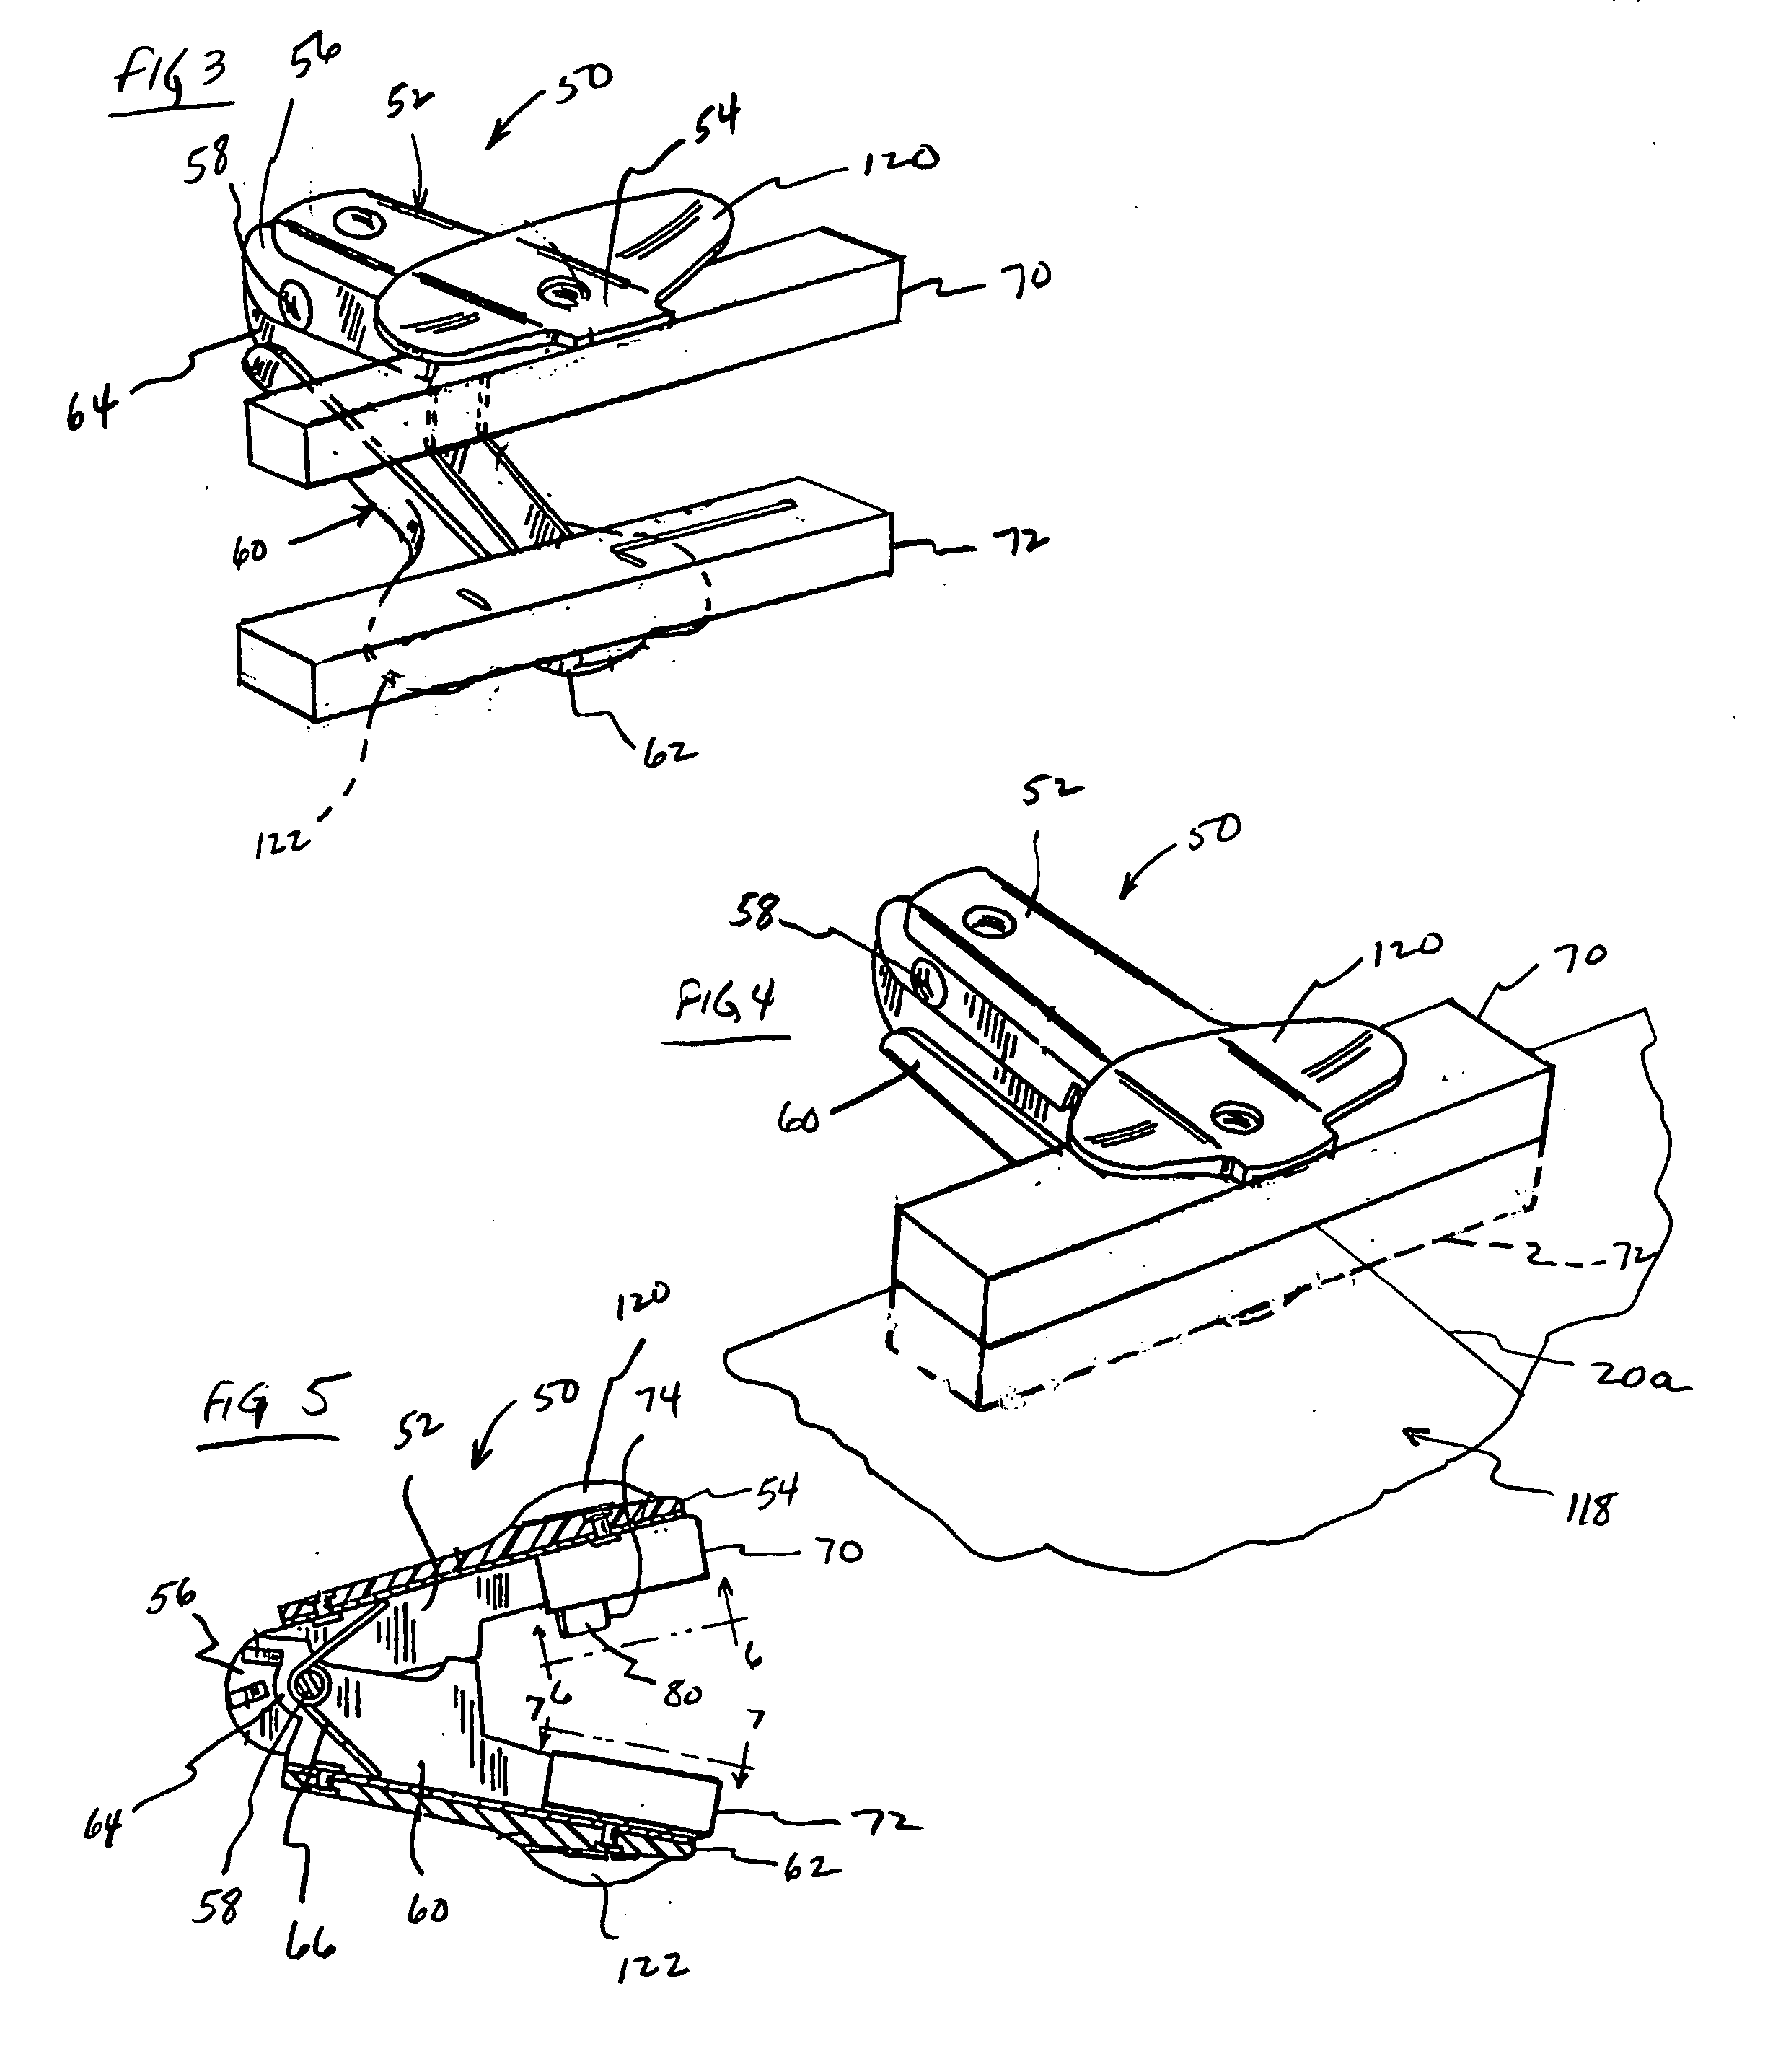 Card brace forming apparatus